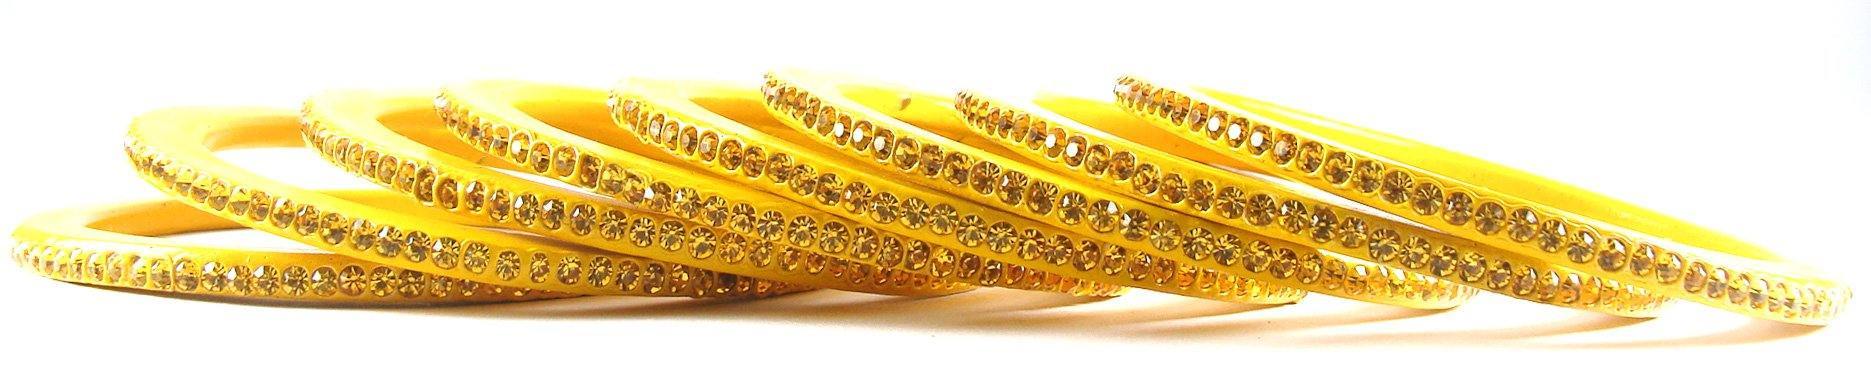 sukriti rajasthani traditional yellow lac bangles for women - set of 8